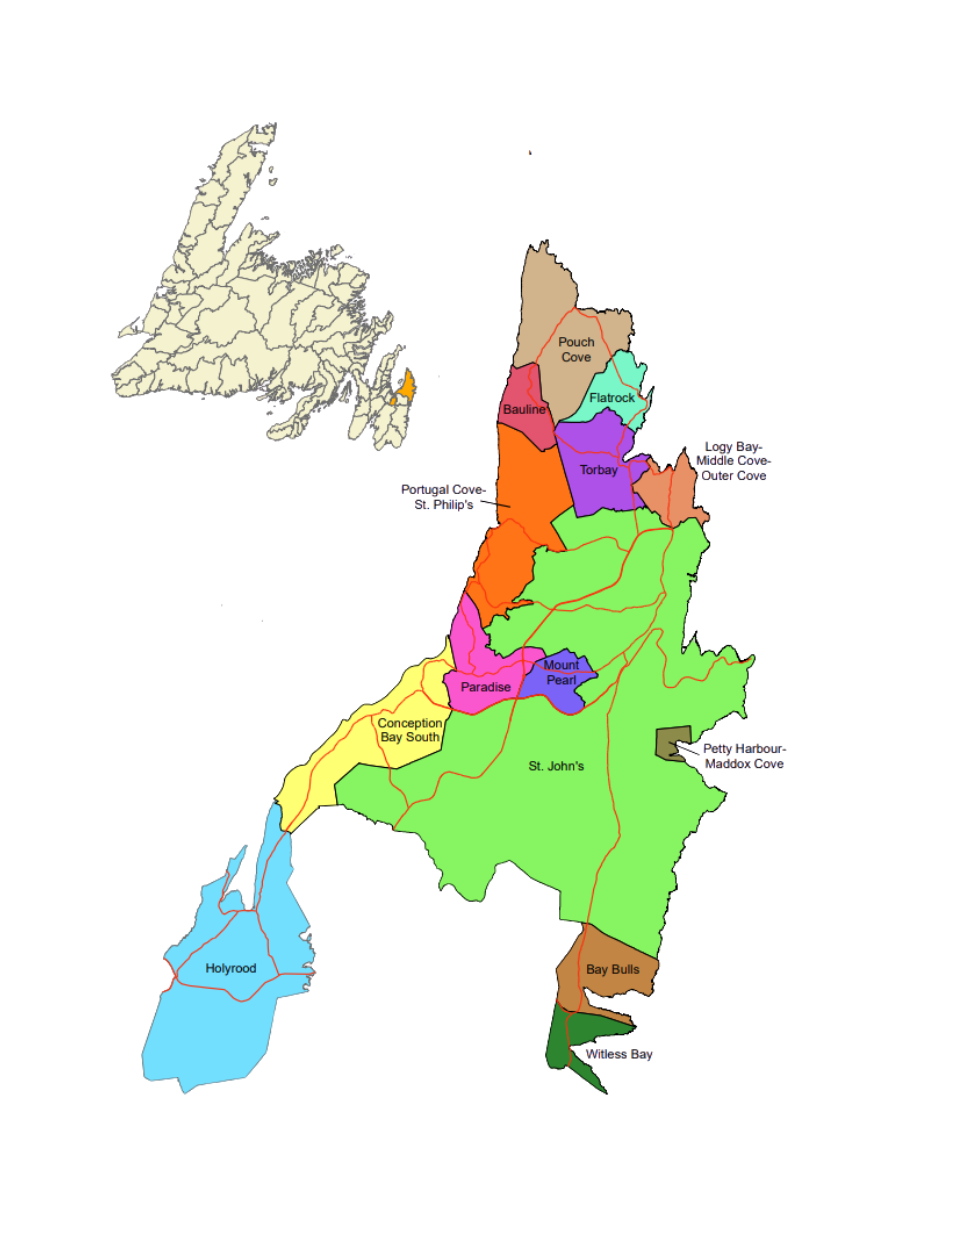 NL map of the St. John's census metropolitan area